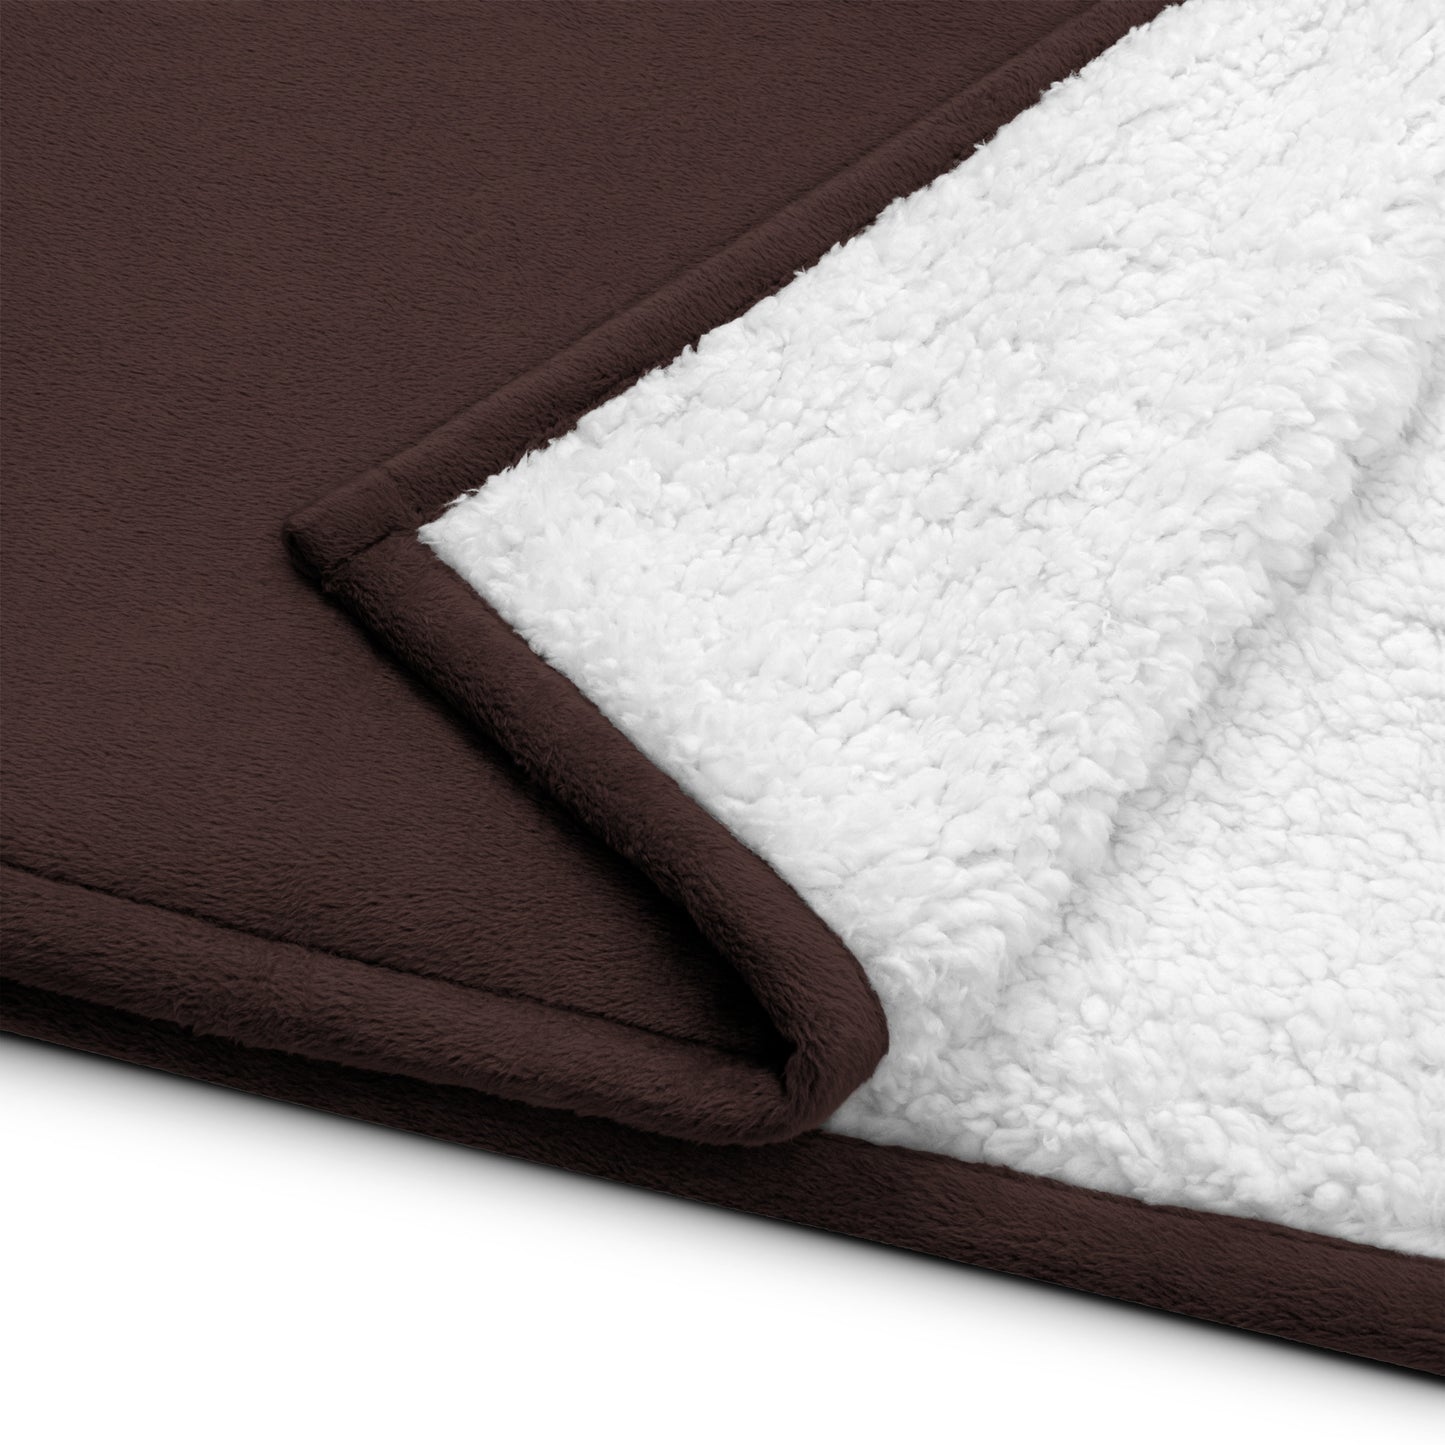 BLDN Premium Sherpa Blanket